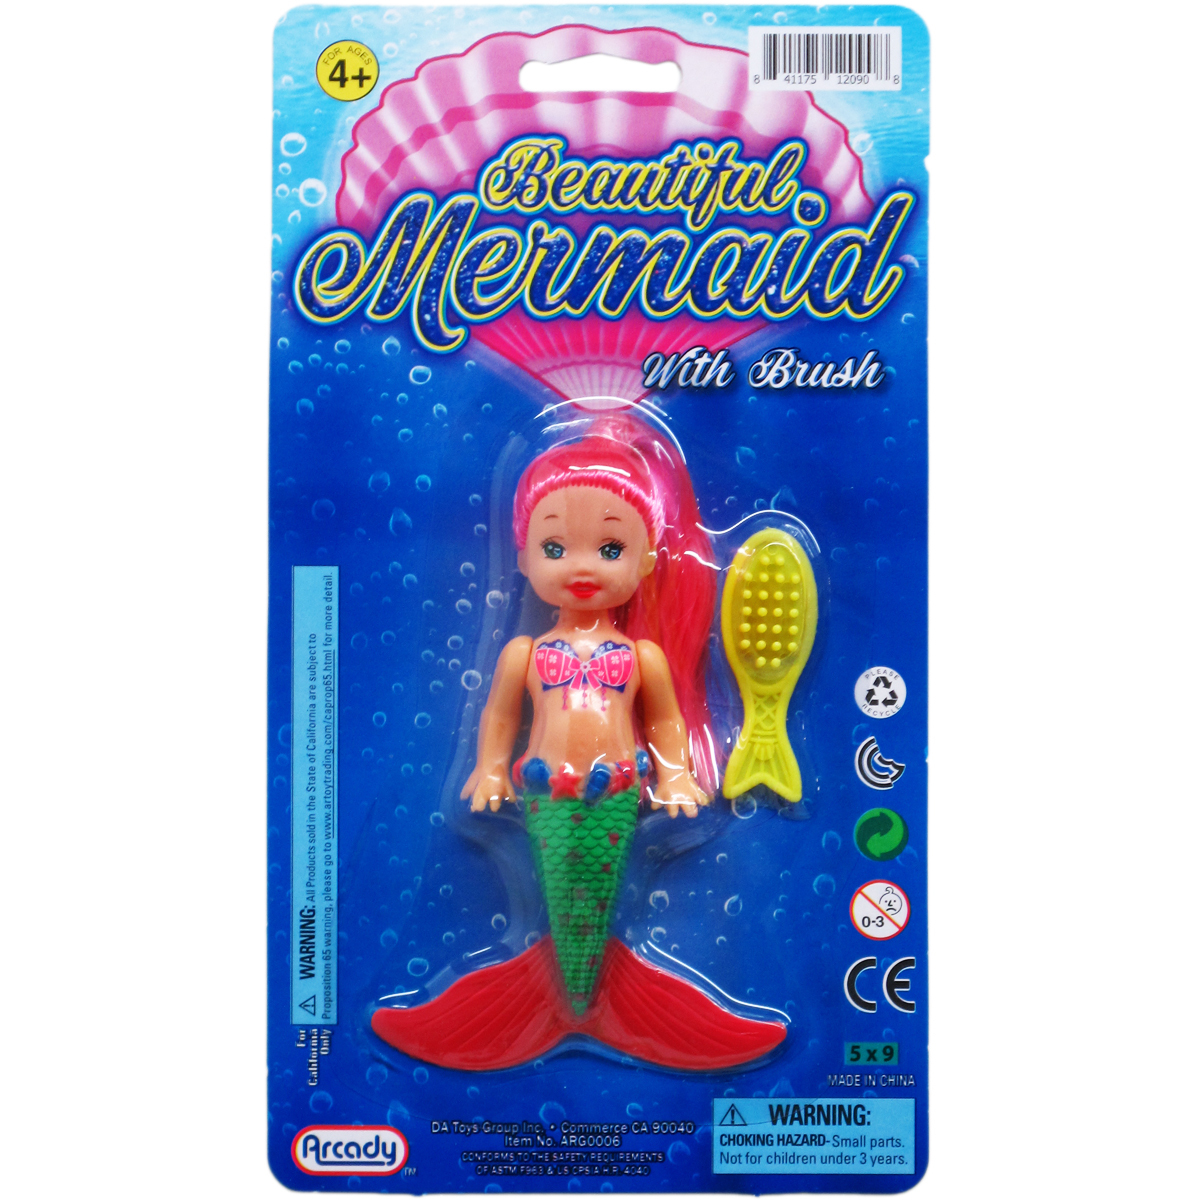 Kawaii Fashion Body For Dolls Plastic Mermaid Toys For Girls Kids